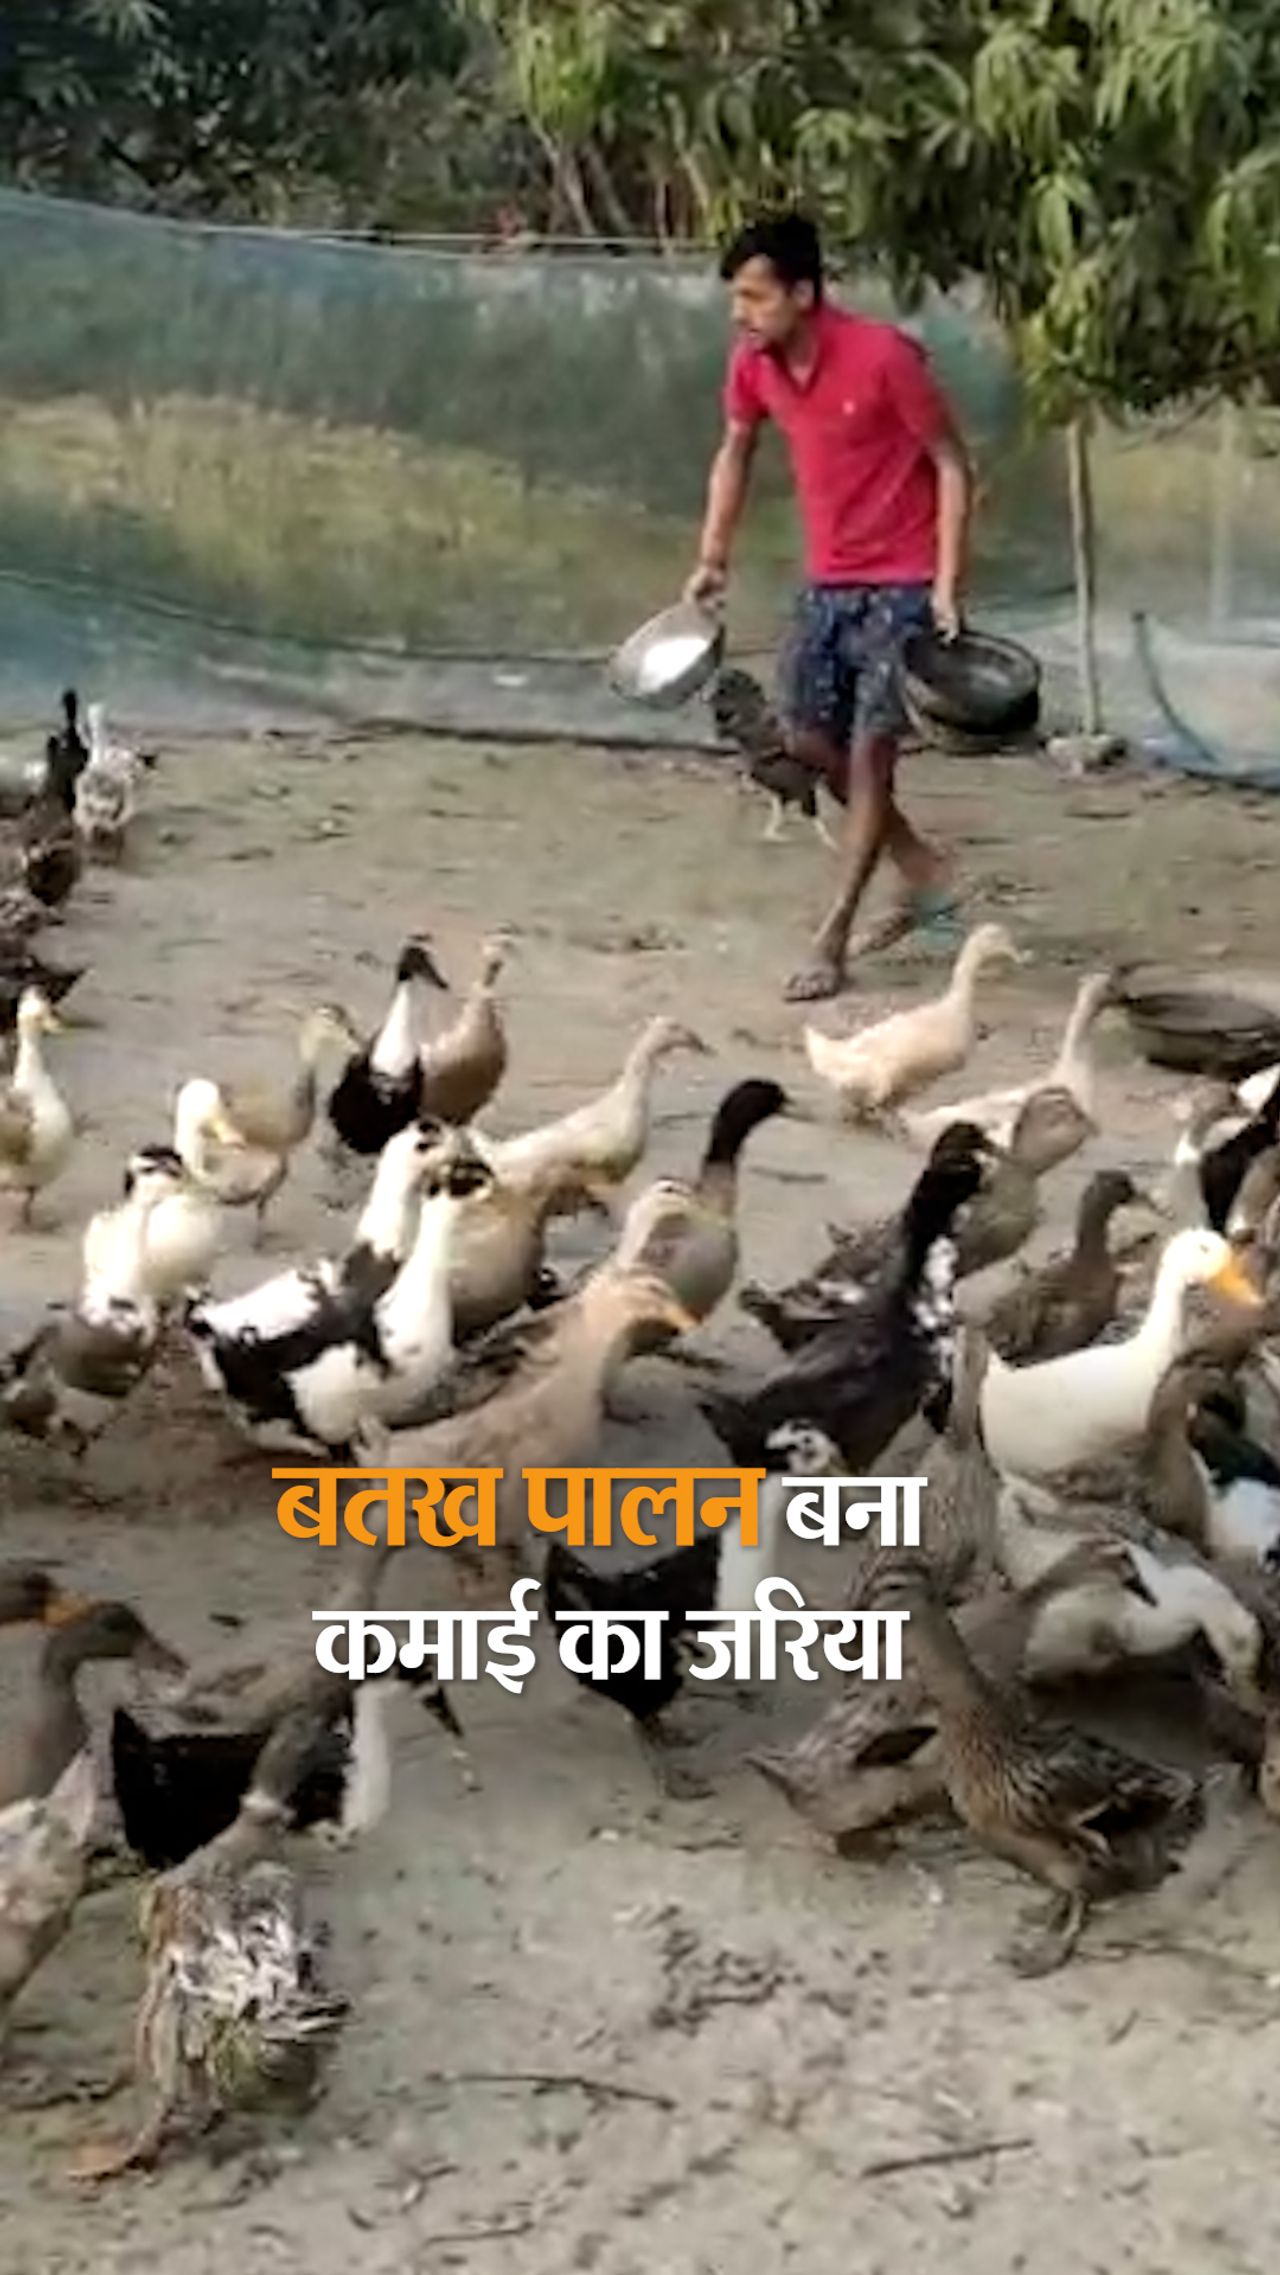 Bihari student Rahul Mishra earning lakhs from duck farming